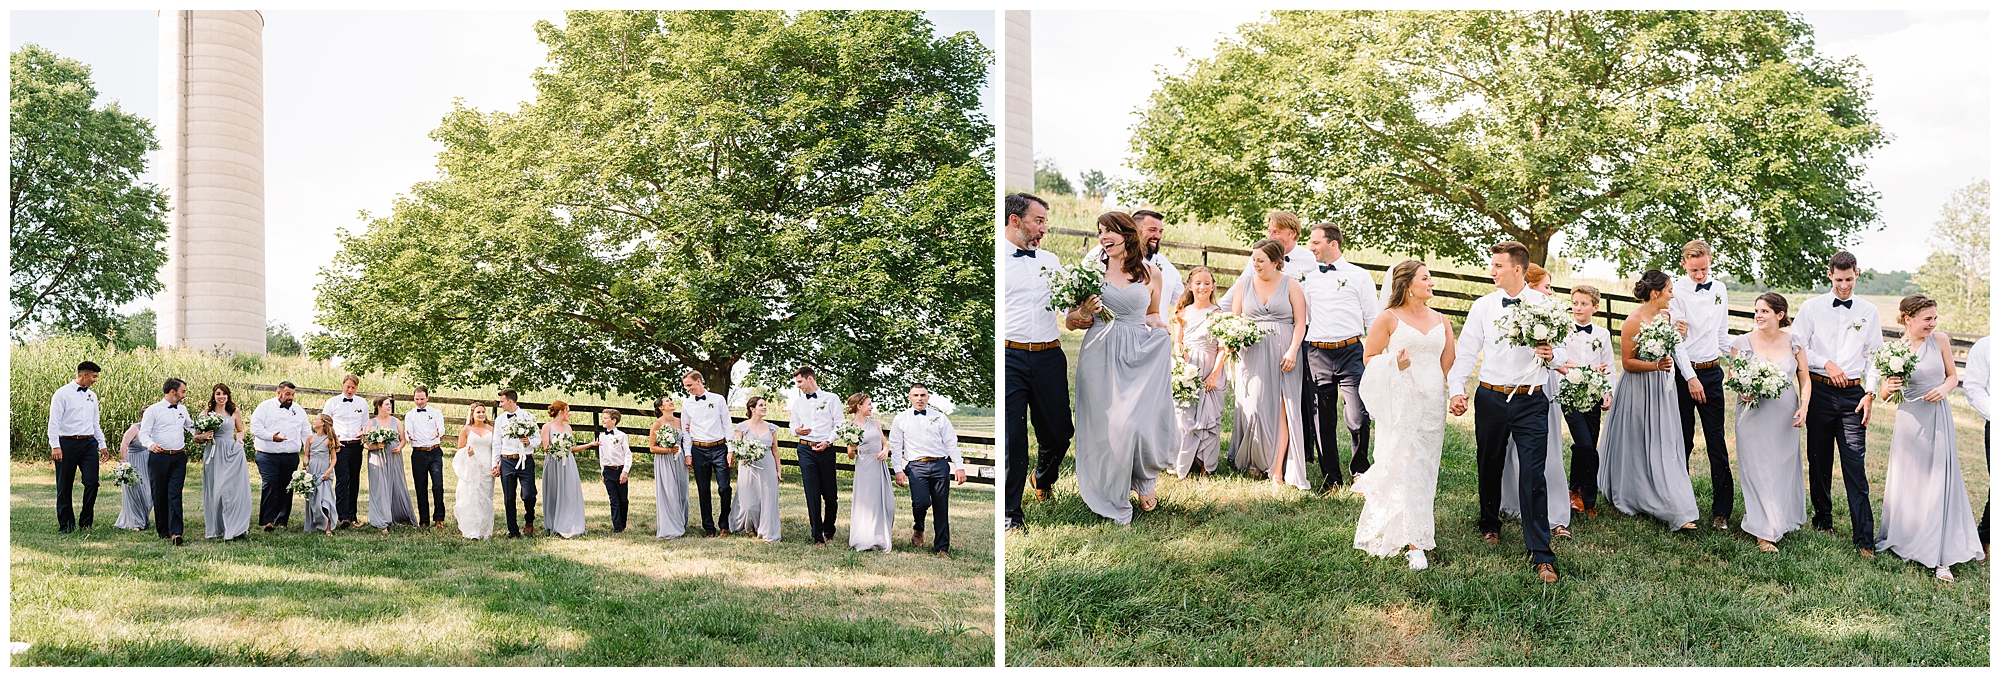 KrystaNormanPhoto_Intimate_Summer_Wedding_Tranquility_Farm_Photographer_Krysta_Norman_0040.jpg